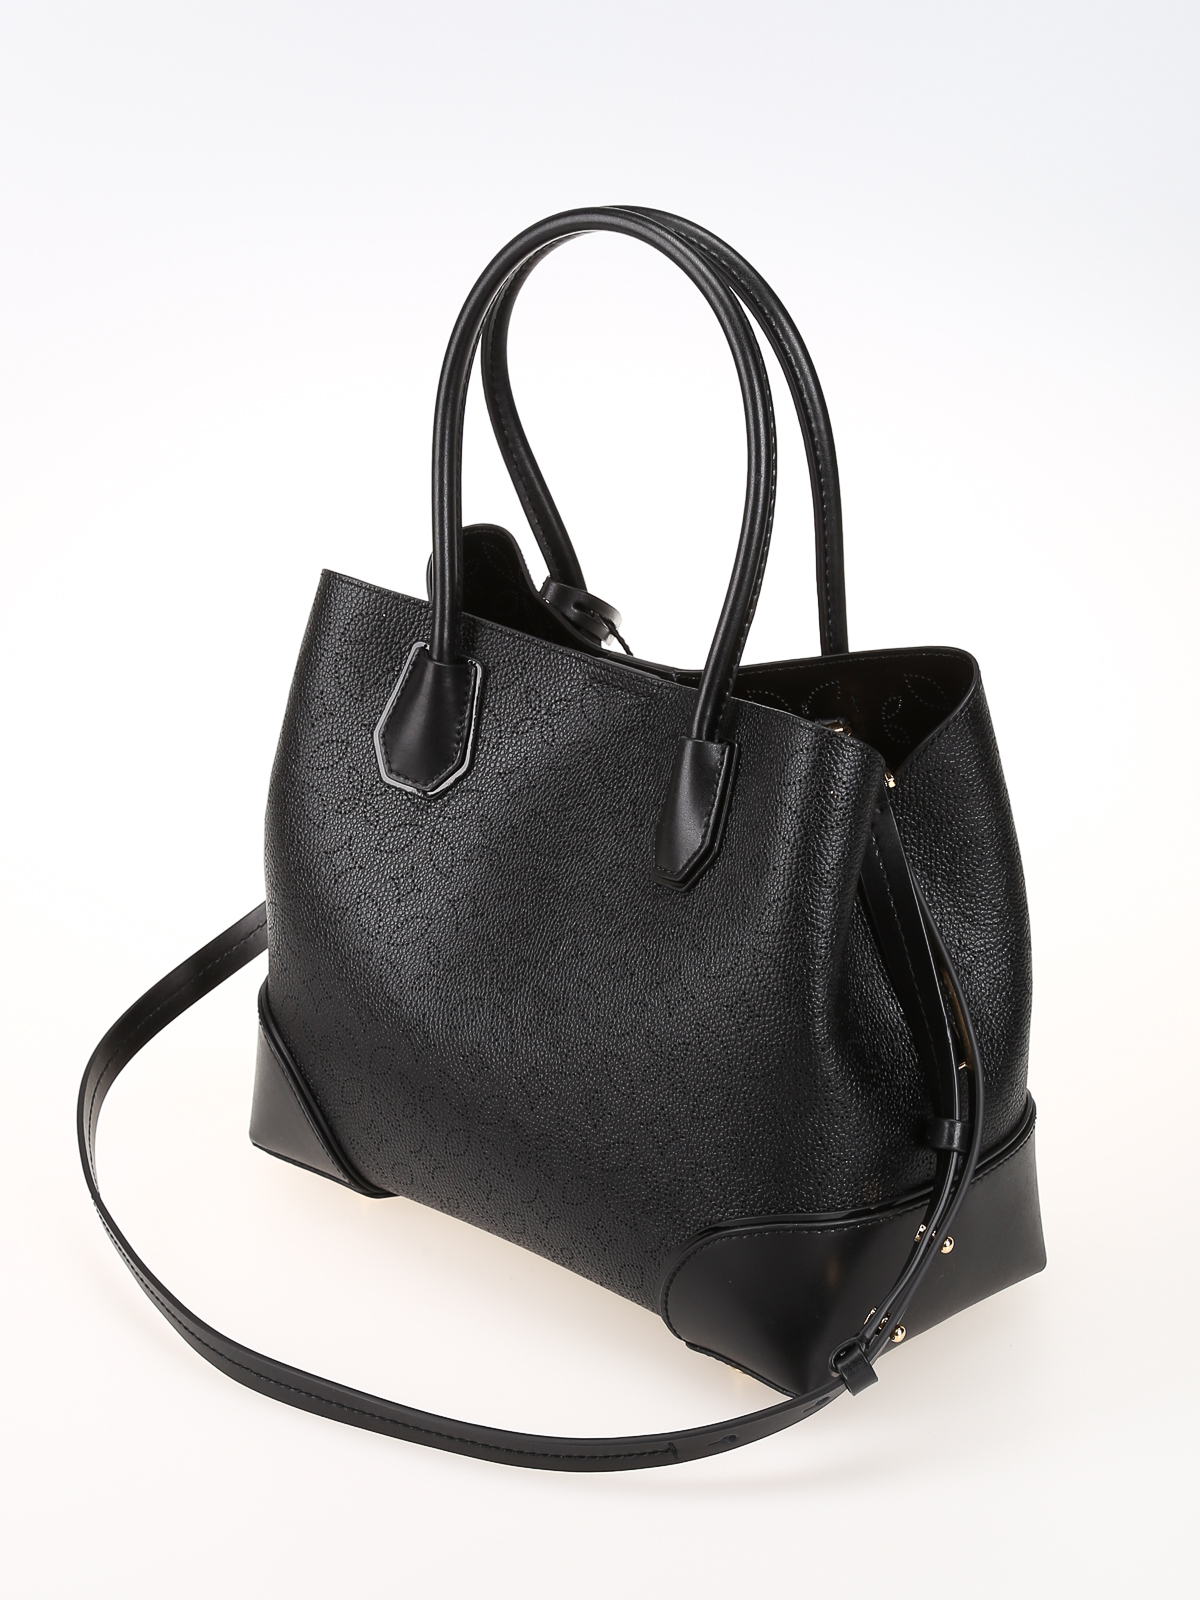 Michael Kors Women's Mercer Medium Crossbody Bag, Black (Black), 22x19x11  cm (W x H x L): Amazon.co.uk: Fashion